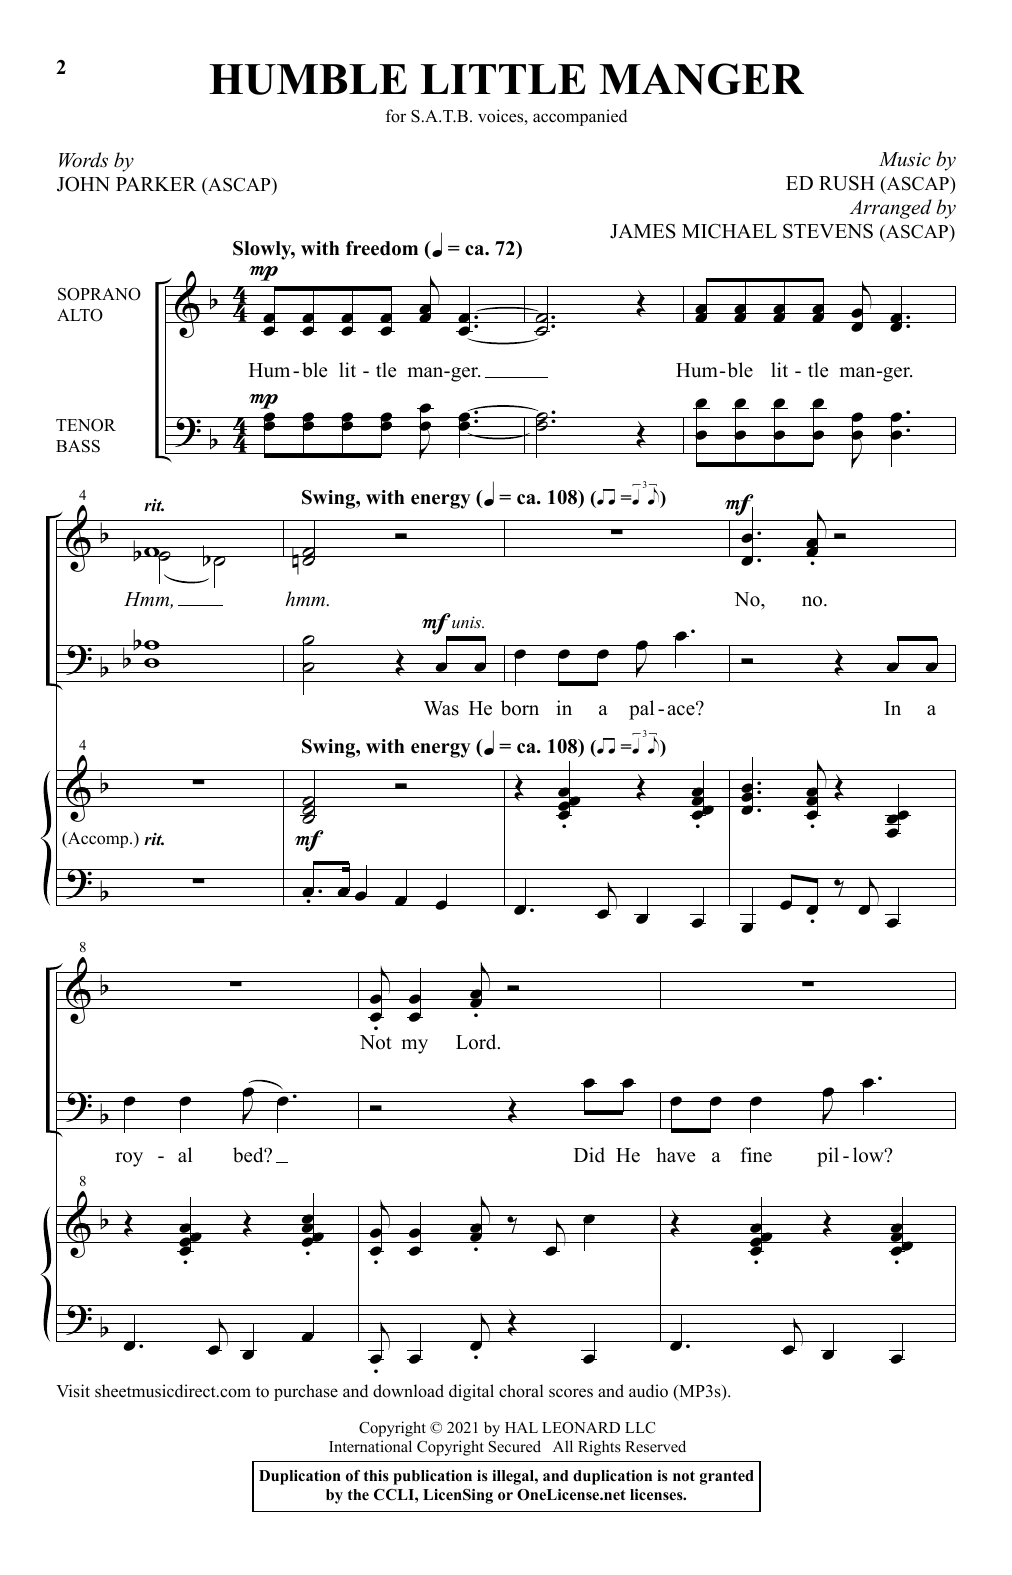 John Parker and Ed Rush Humble Little Manger (arr. James Michael Stevens) Sheet Music Notes & Chords for SATB Choir - Download or Print PDF